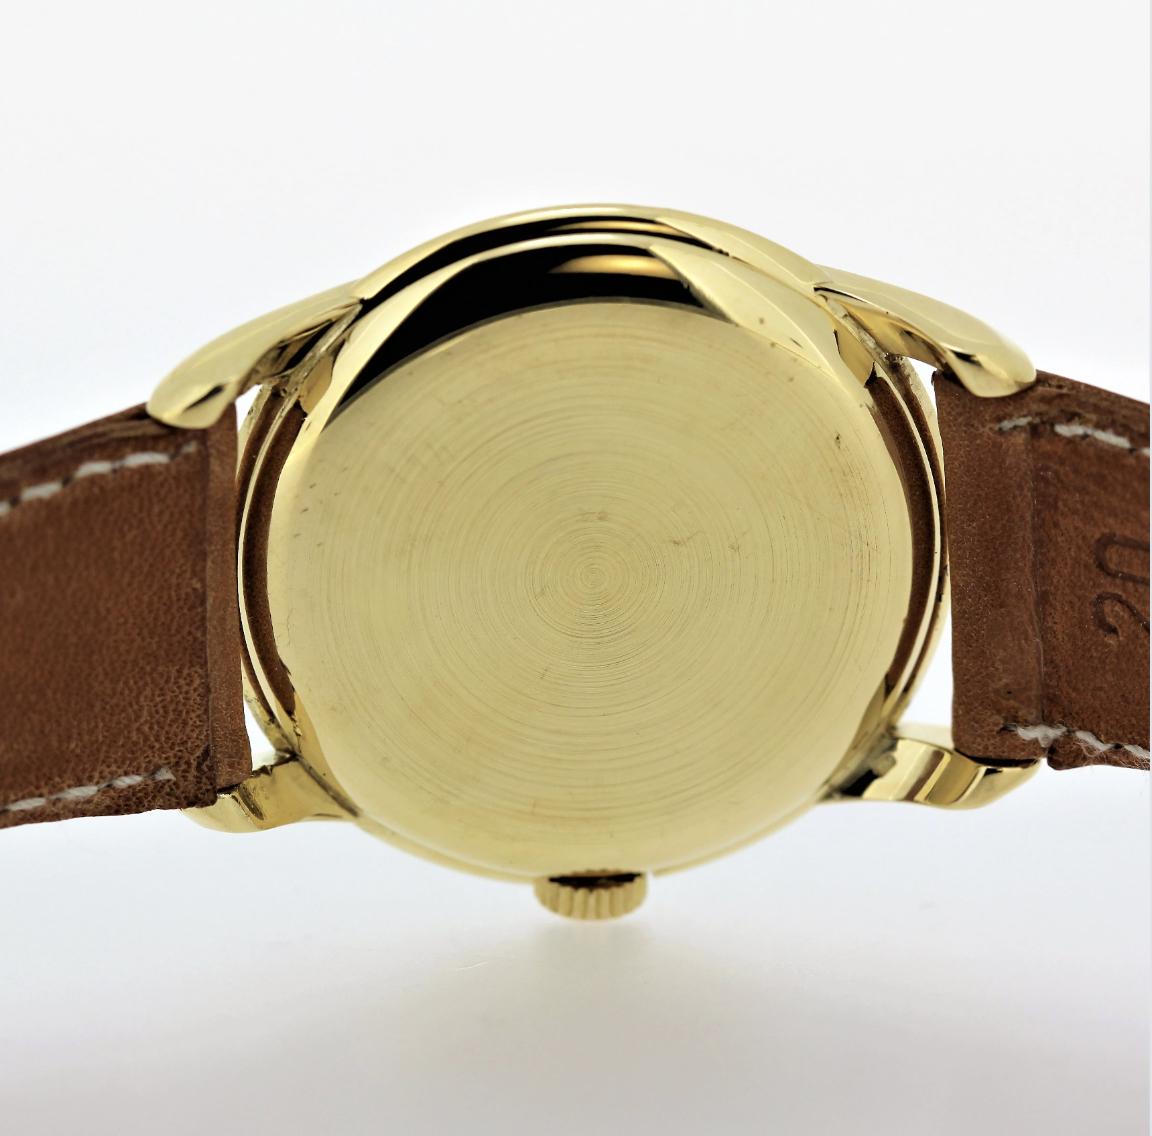 Patek Philippe 1569J Calatrava Watch 3